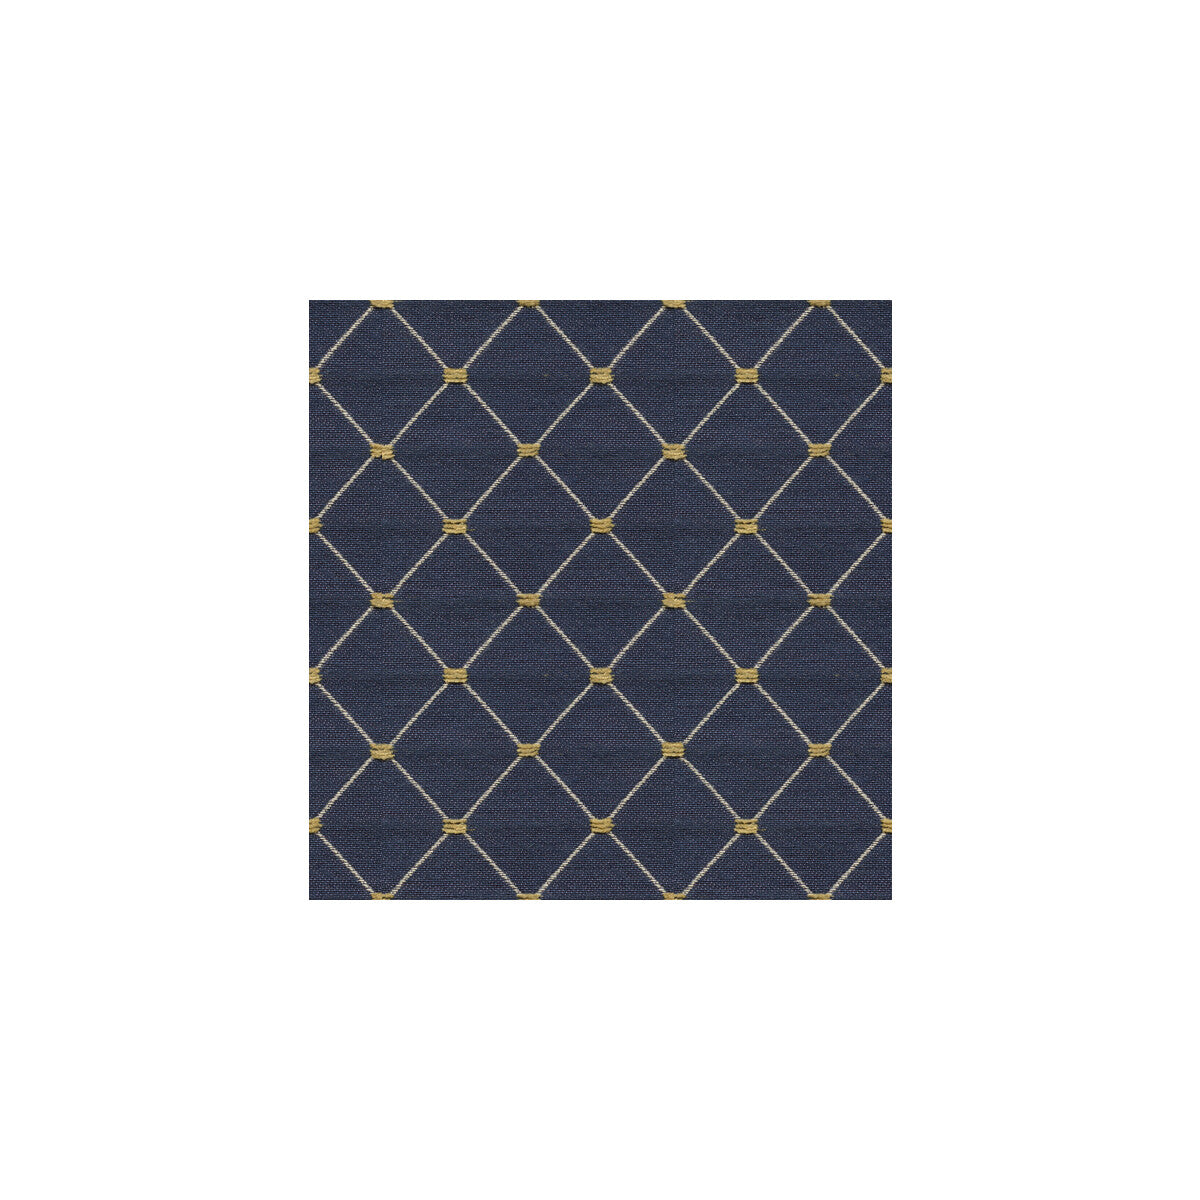 Kravet Design fabric in 31389-50 color - pattern 31389.50.0 - by Kravet Design in the Gis collection